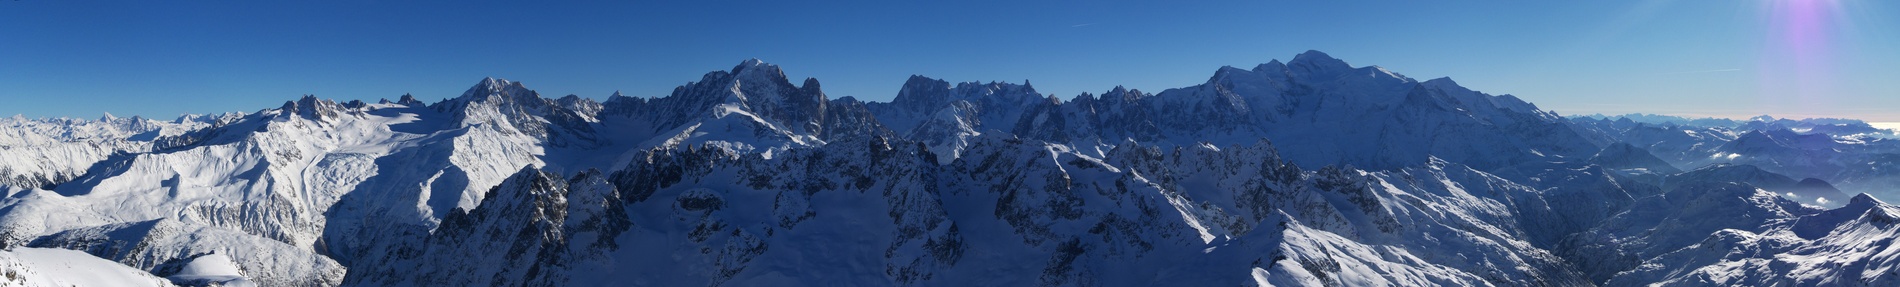 [20101231_160304_BuetPano_.jpg]
The Mt Blanc range seen from the Buet.